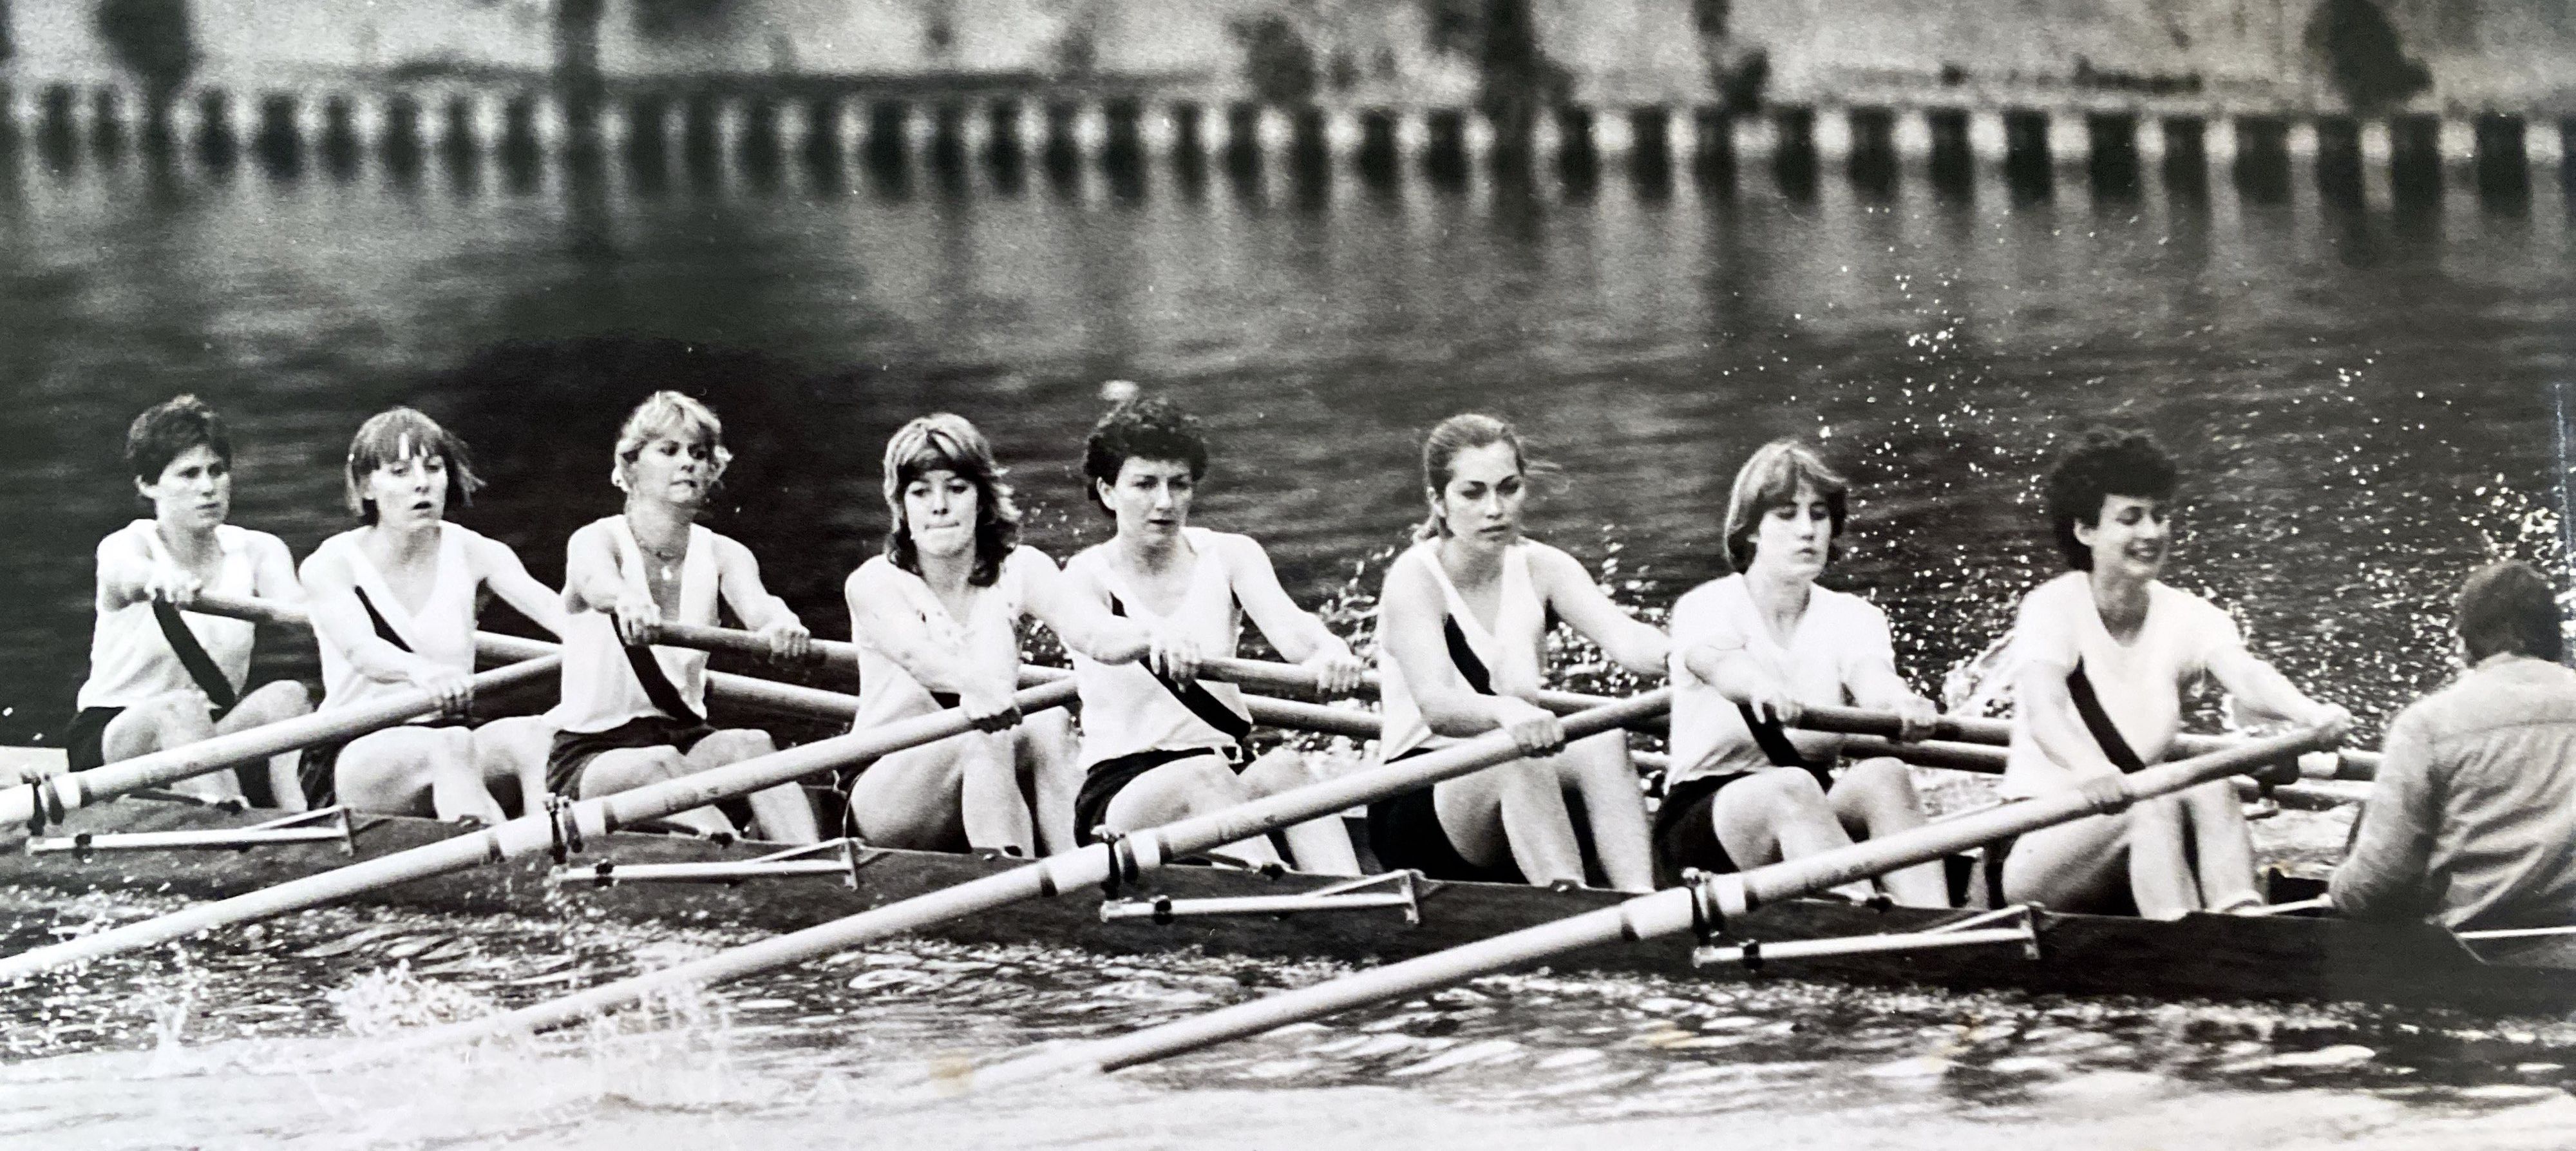 bw photo of women's eight rowing